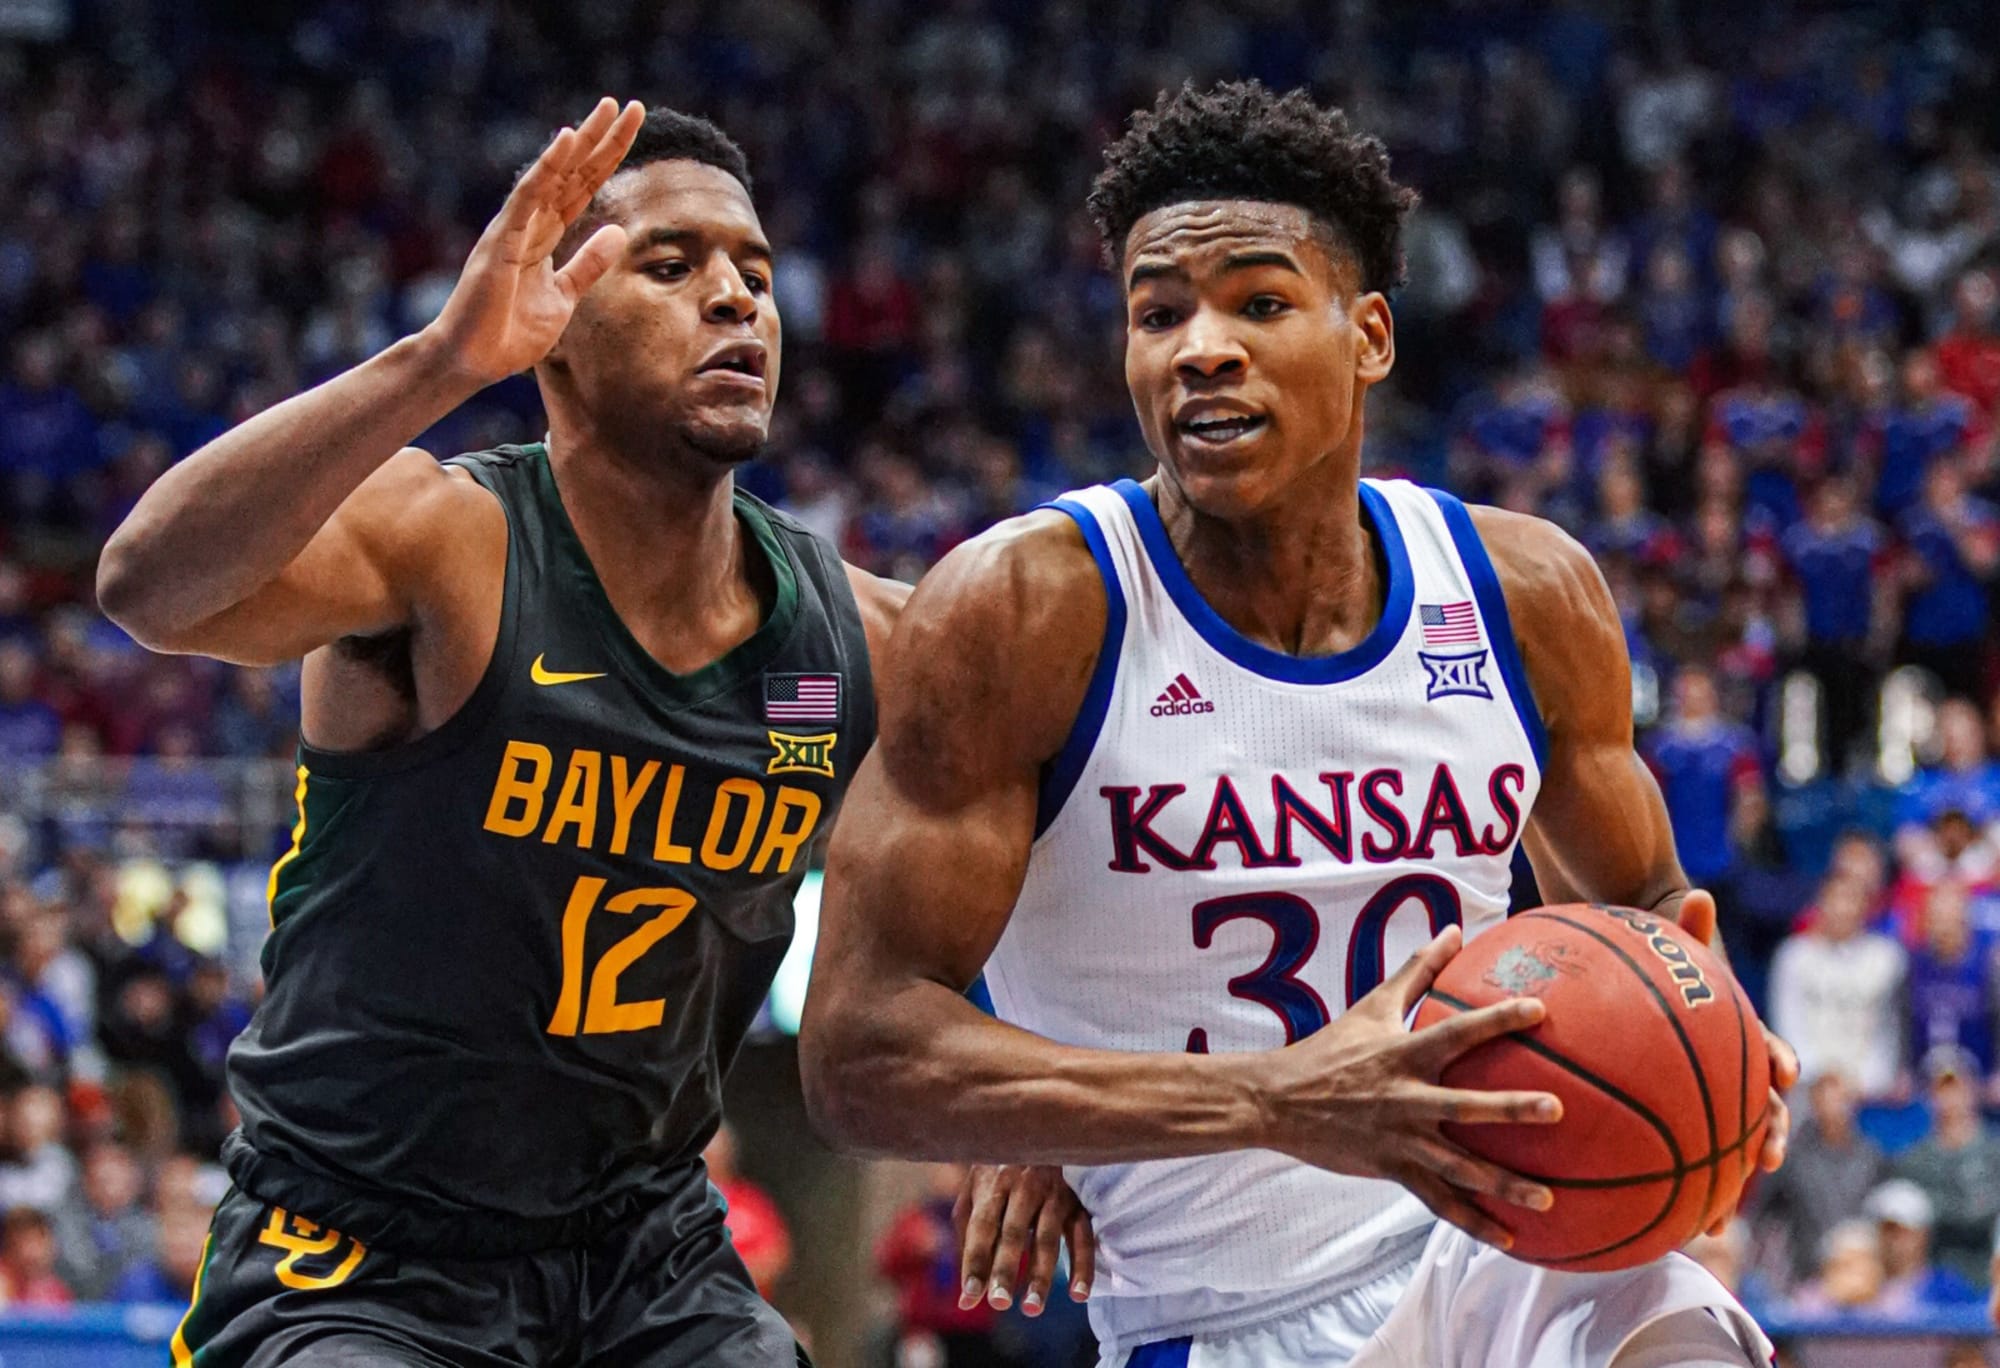 Kansas vs. Baylor: 2020-21 college basketball game preview, TV schedule